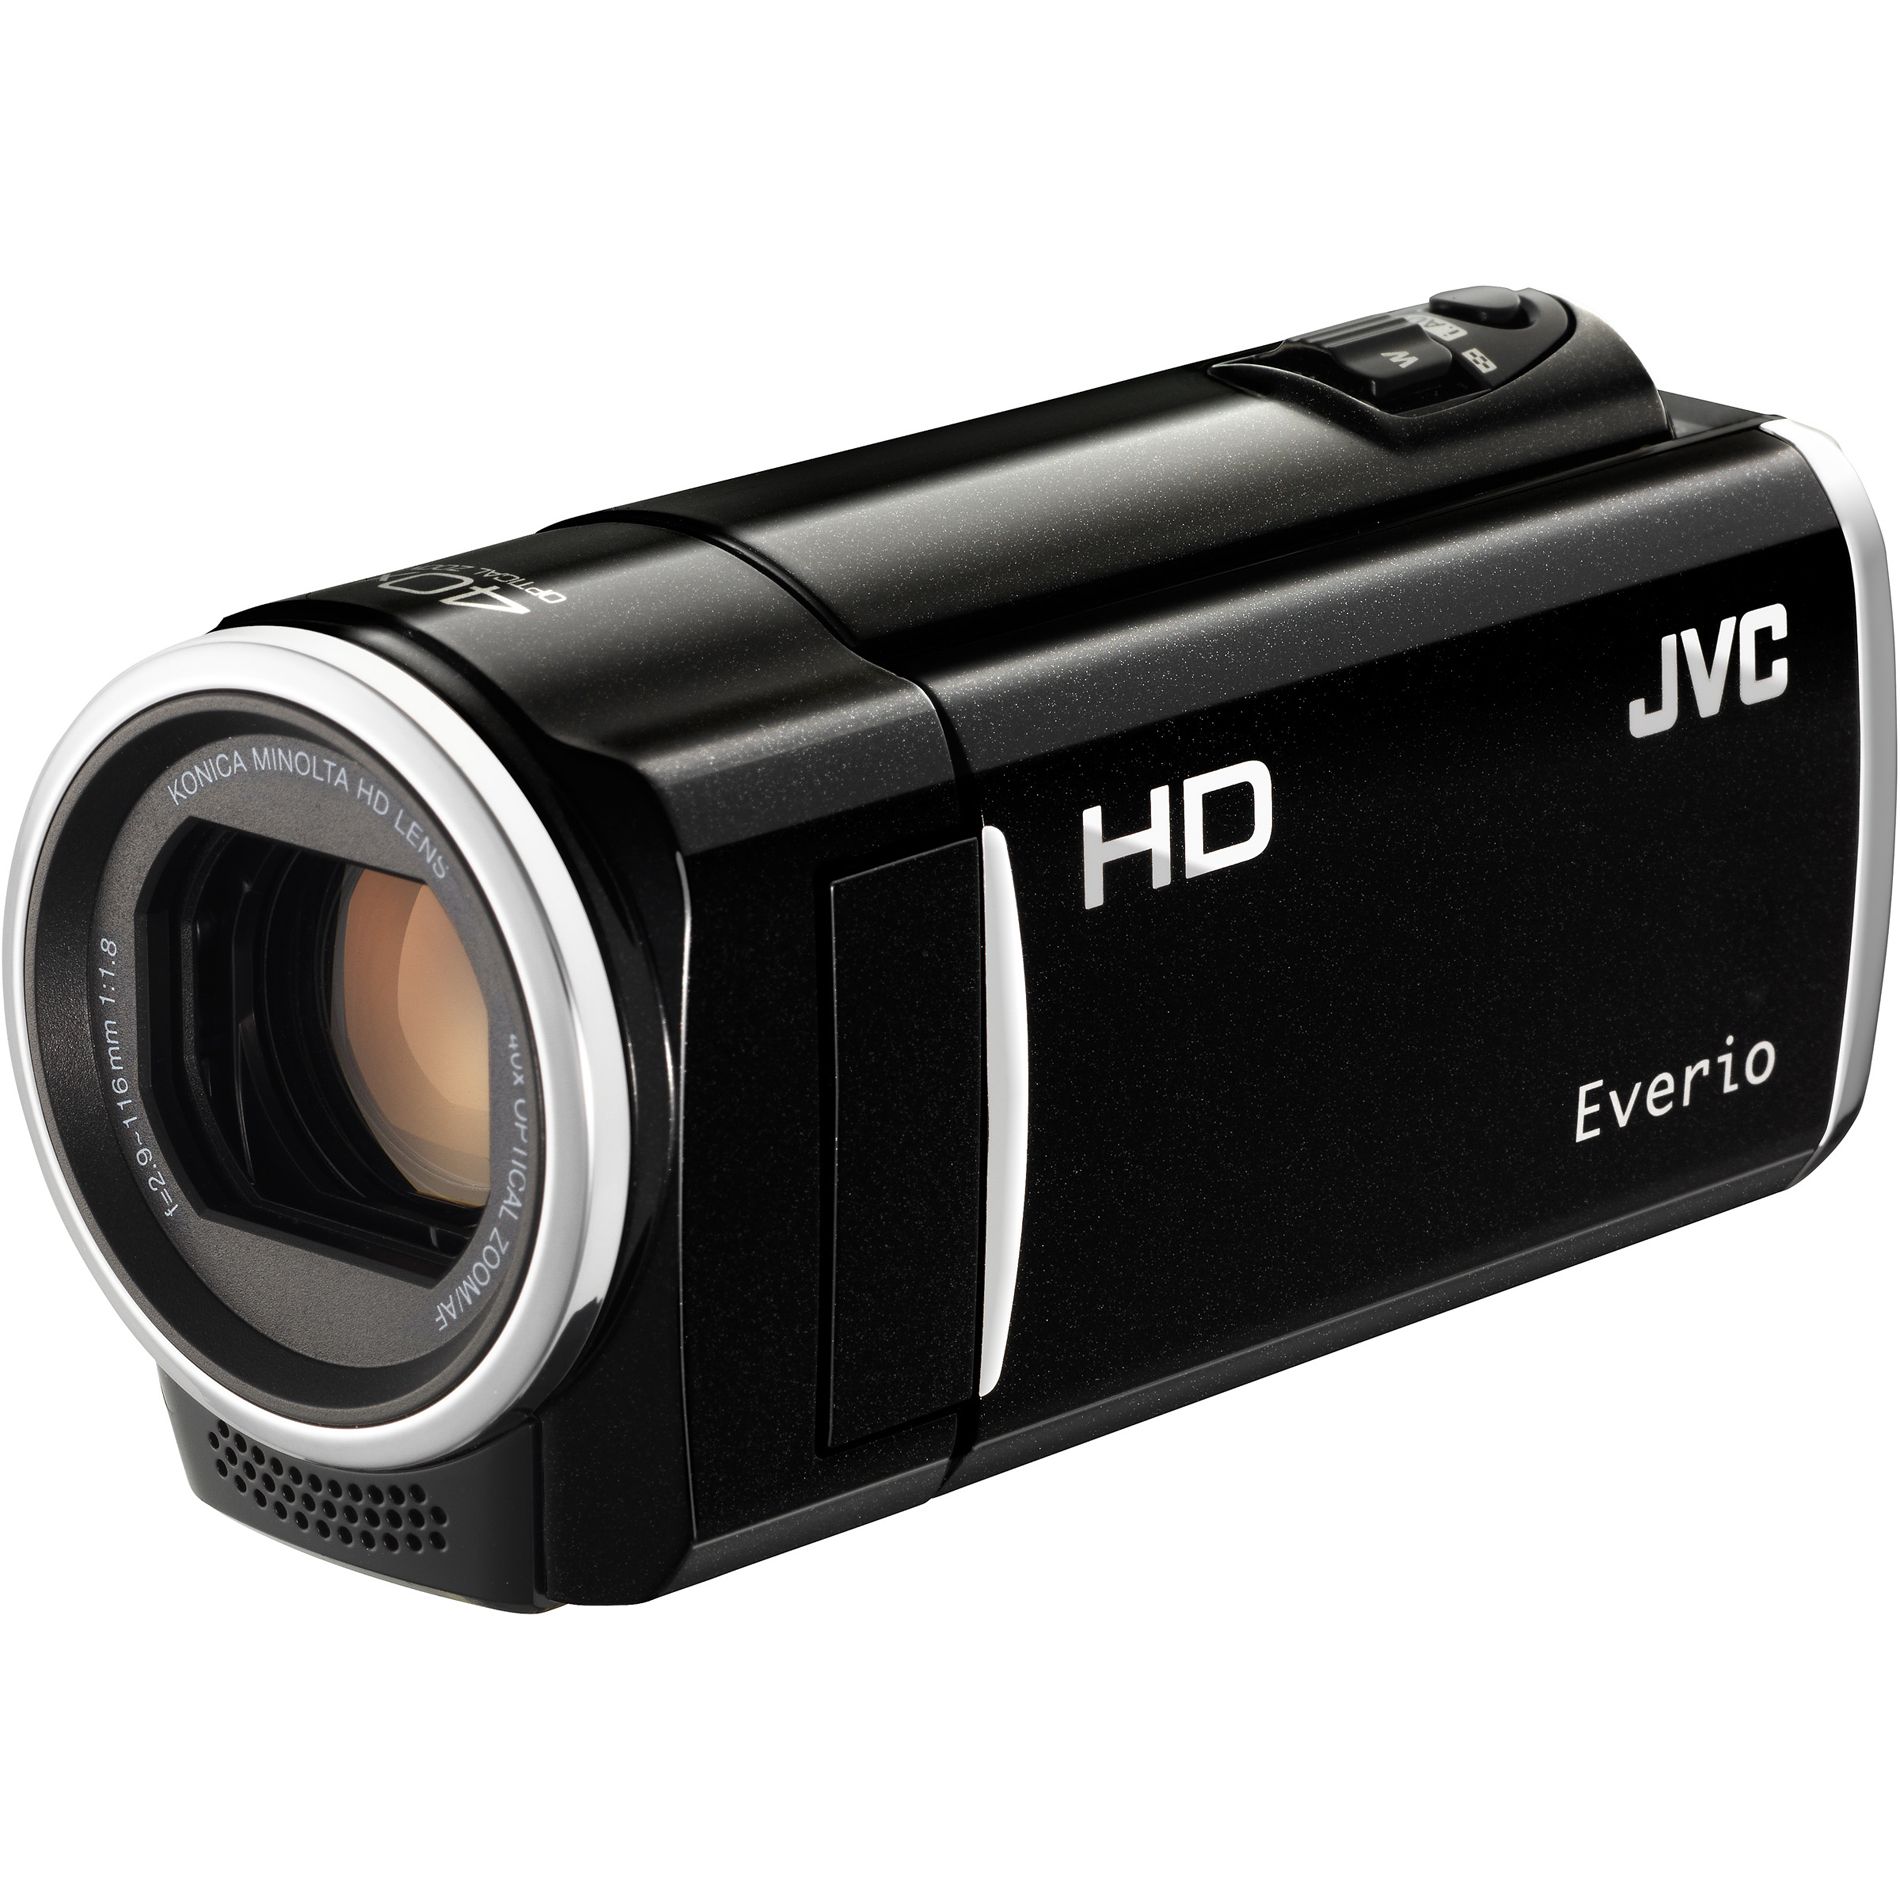 JVC Flash Memory Camcorder